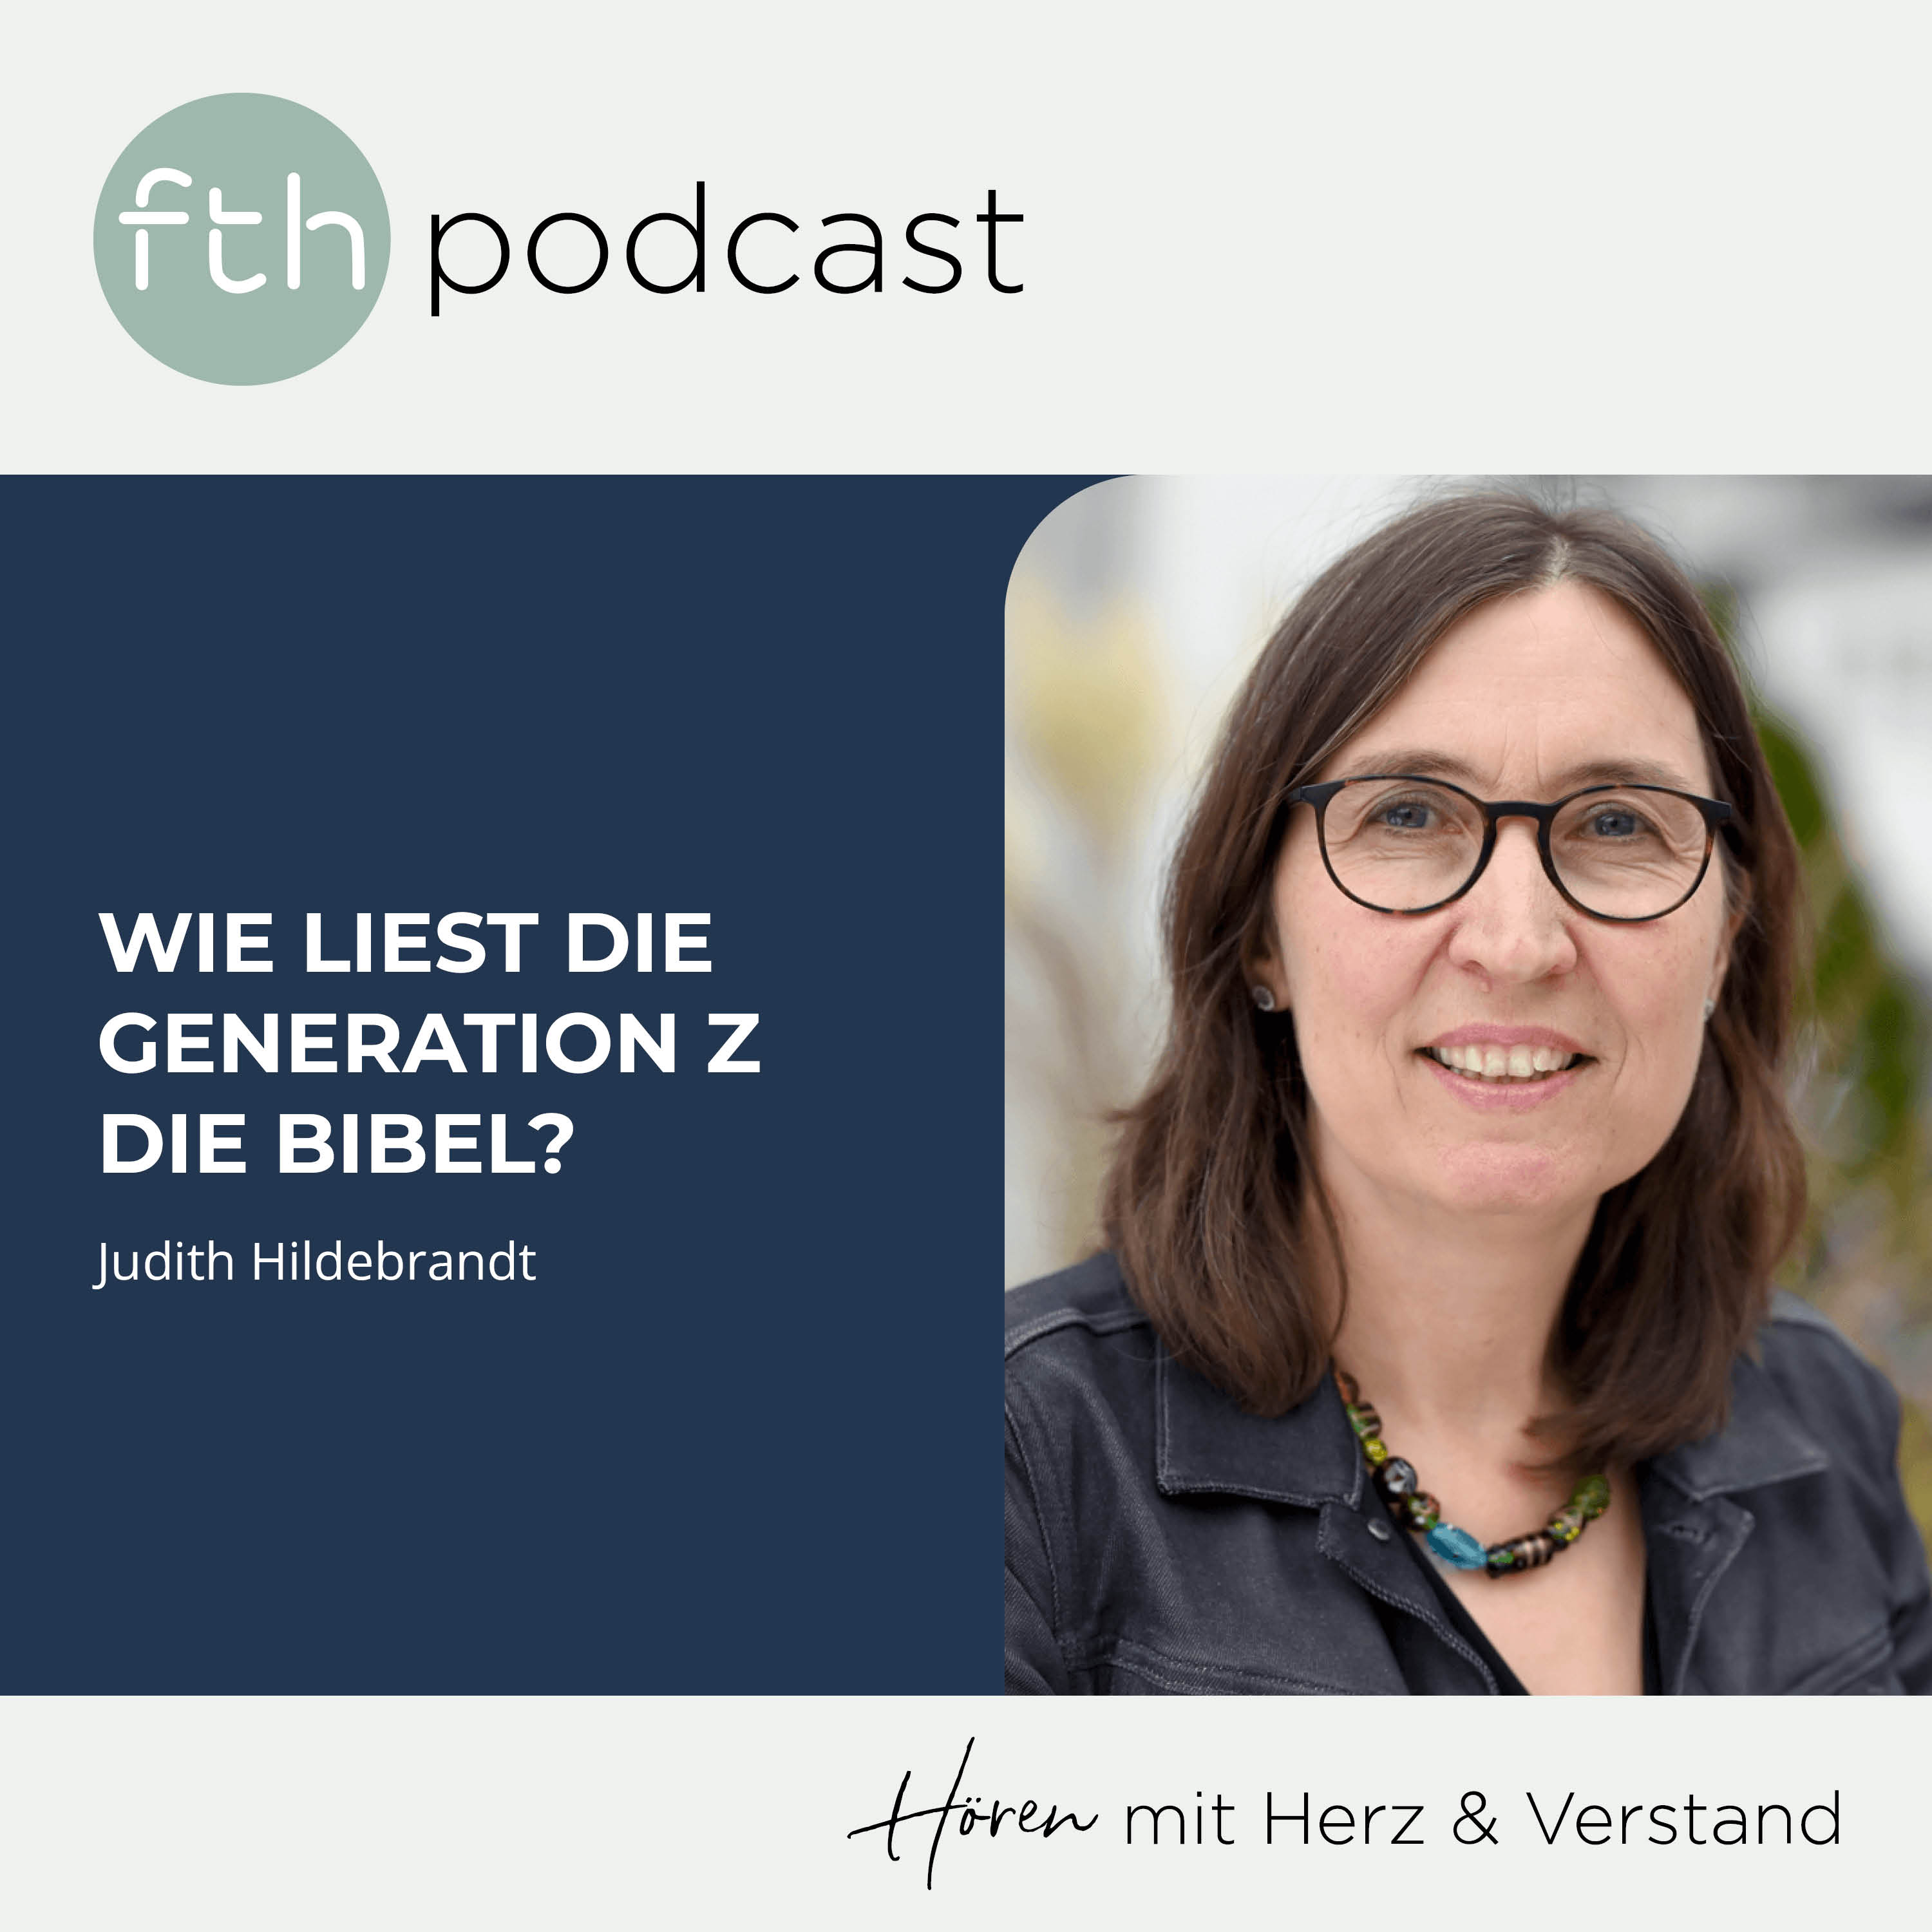 Judith Hildebrandt: Wie liest die Generation Z die Bibel?